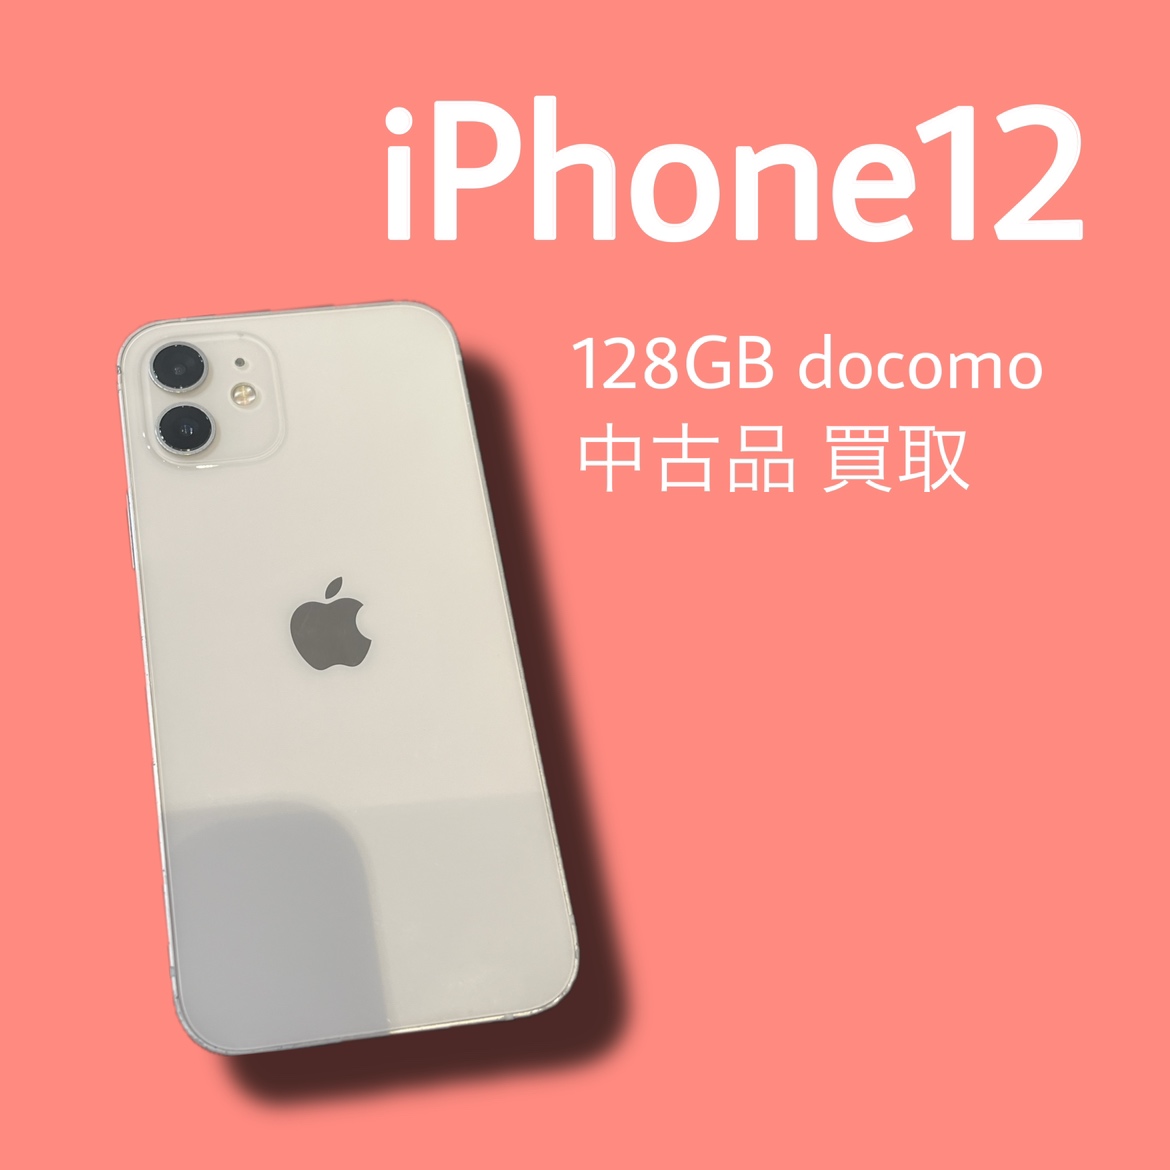 iPhone12・128GB・docomo・ネット制限〇【天神地下街店】